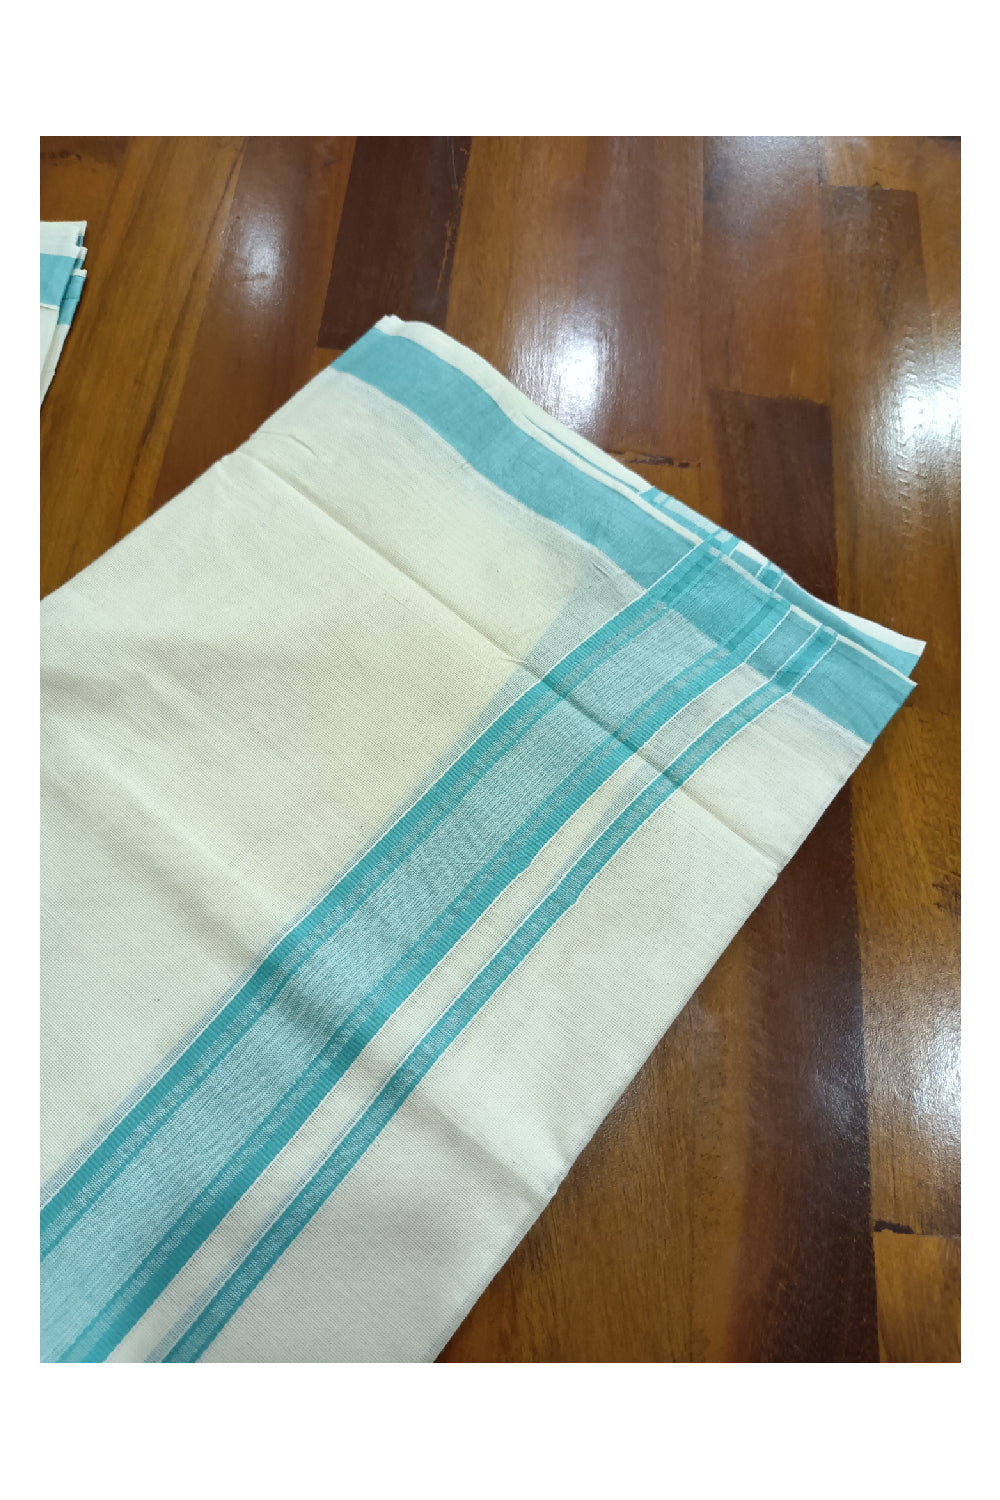 Off White Kerala Double Mundu with Turquoise Kara (South Indian Dhoti)